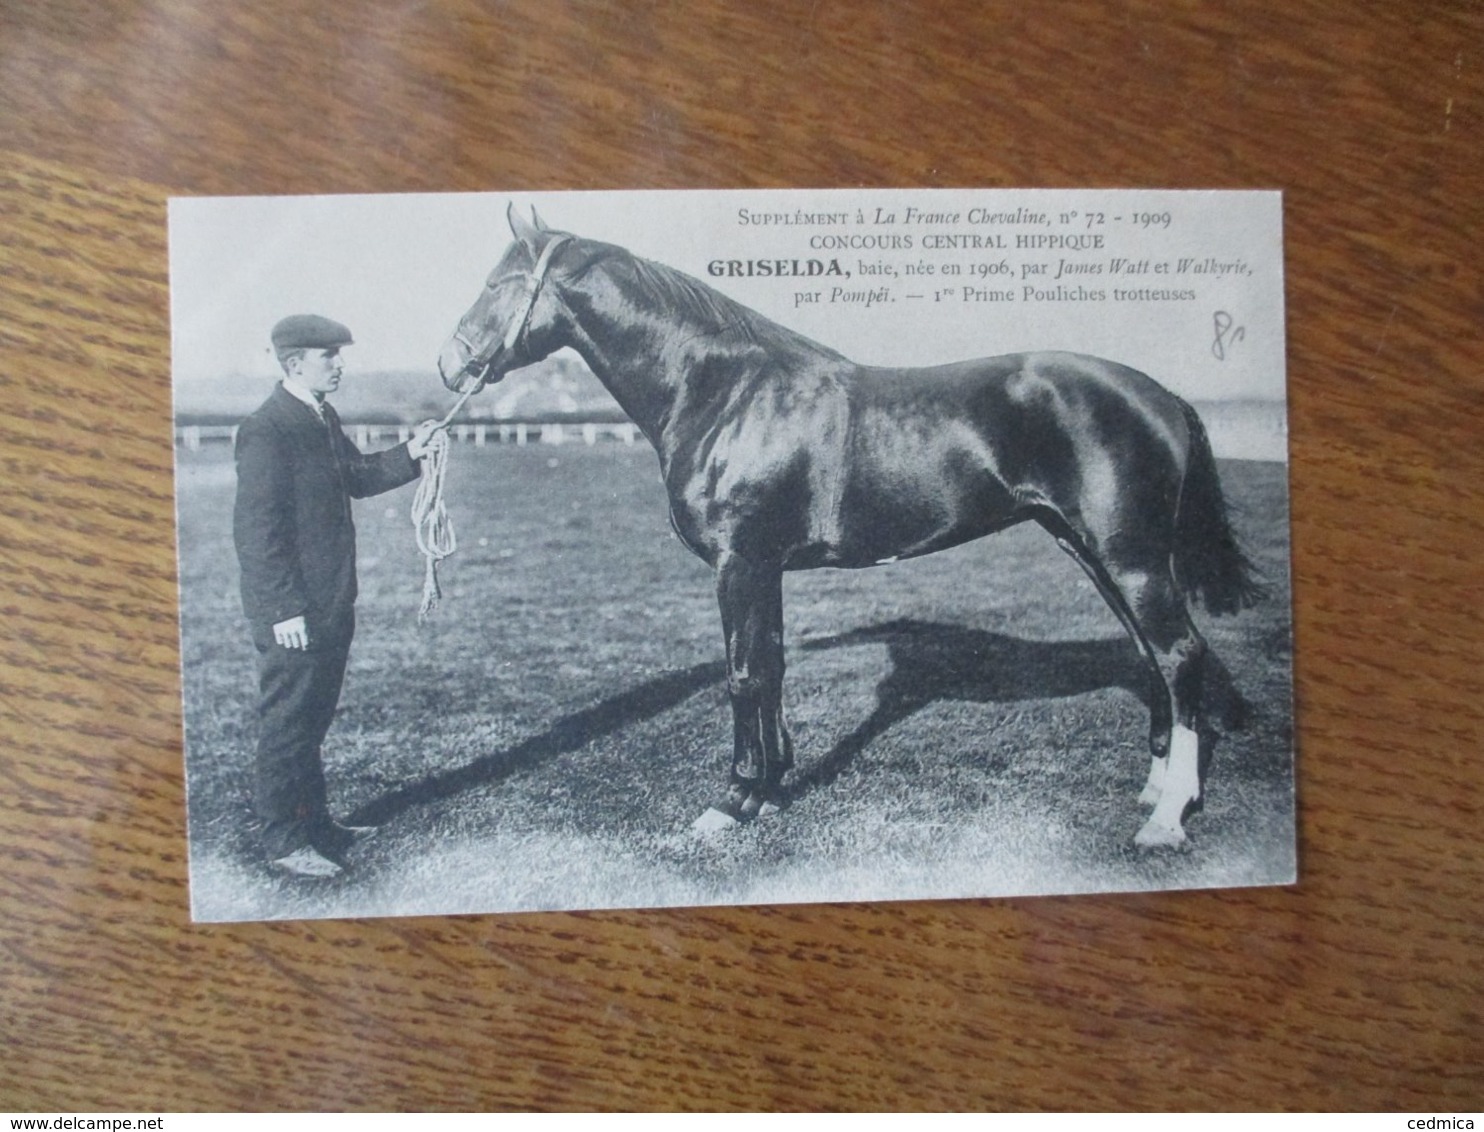 GRISELDA,BAIE,NEE EN 1906, PAR JAMES WATT ET WALKYRIE ,PAR POMPEÏ,1re PRIME, SUPPLEMENT A LA FRANCE CHEVALINE N° 72-1909 - Pferde